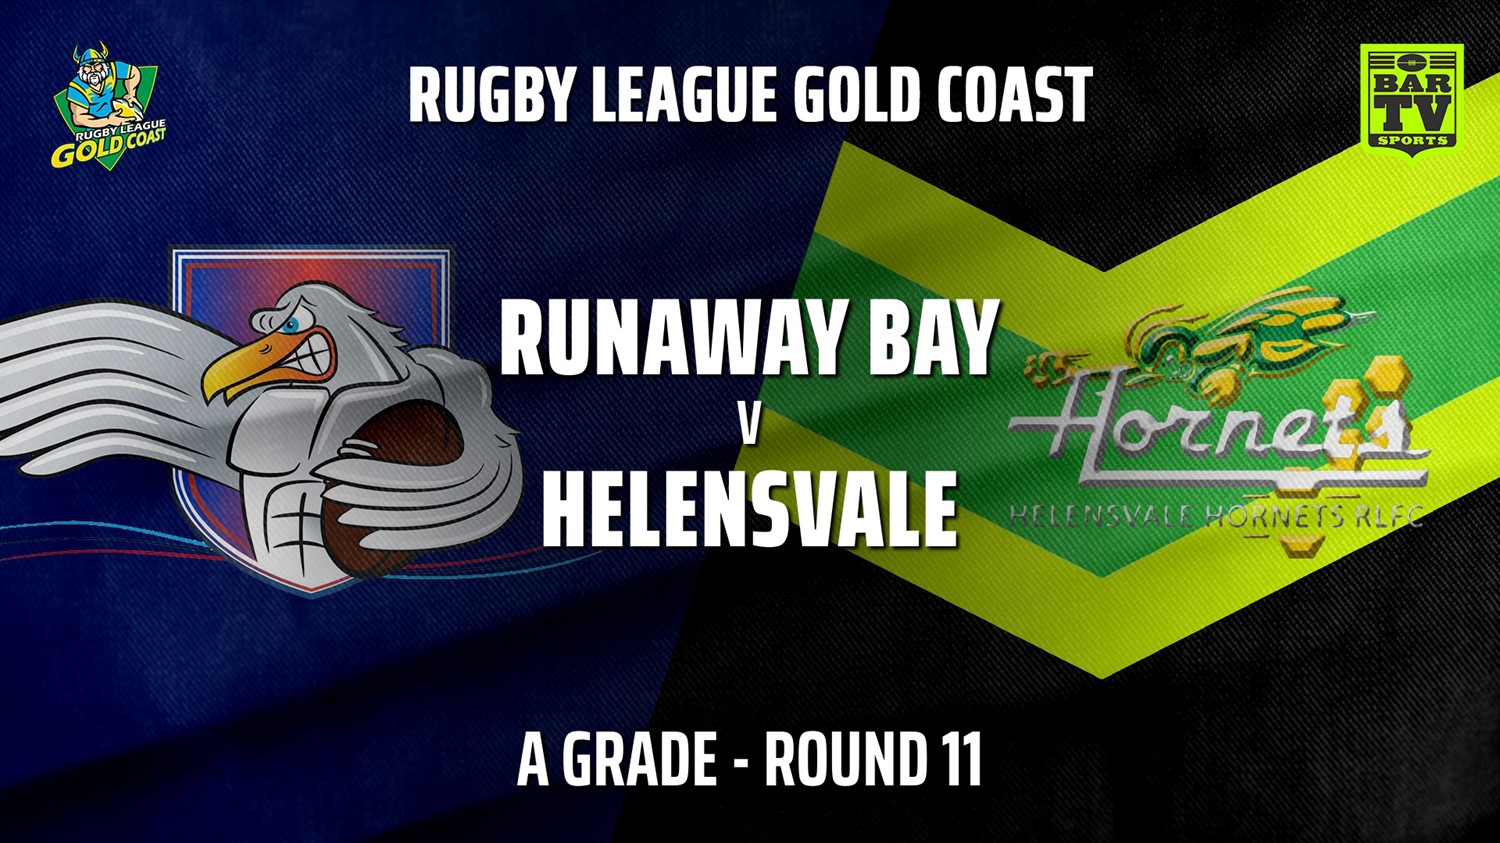 210829-Gold Coast Round 11 - A Grade - Runaway Bay v Helensvale Hornets Slate Image